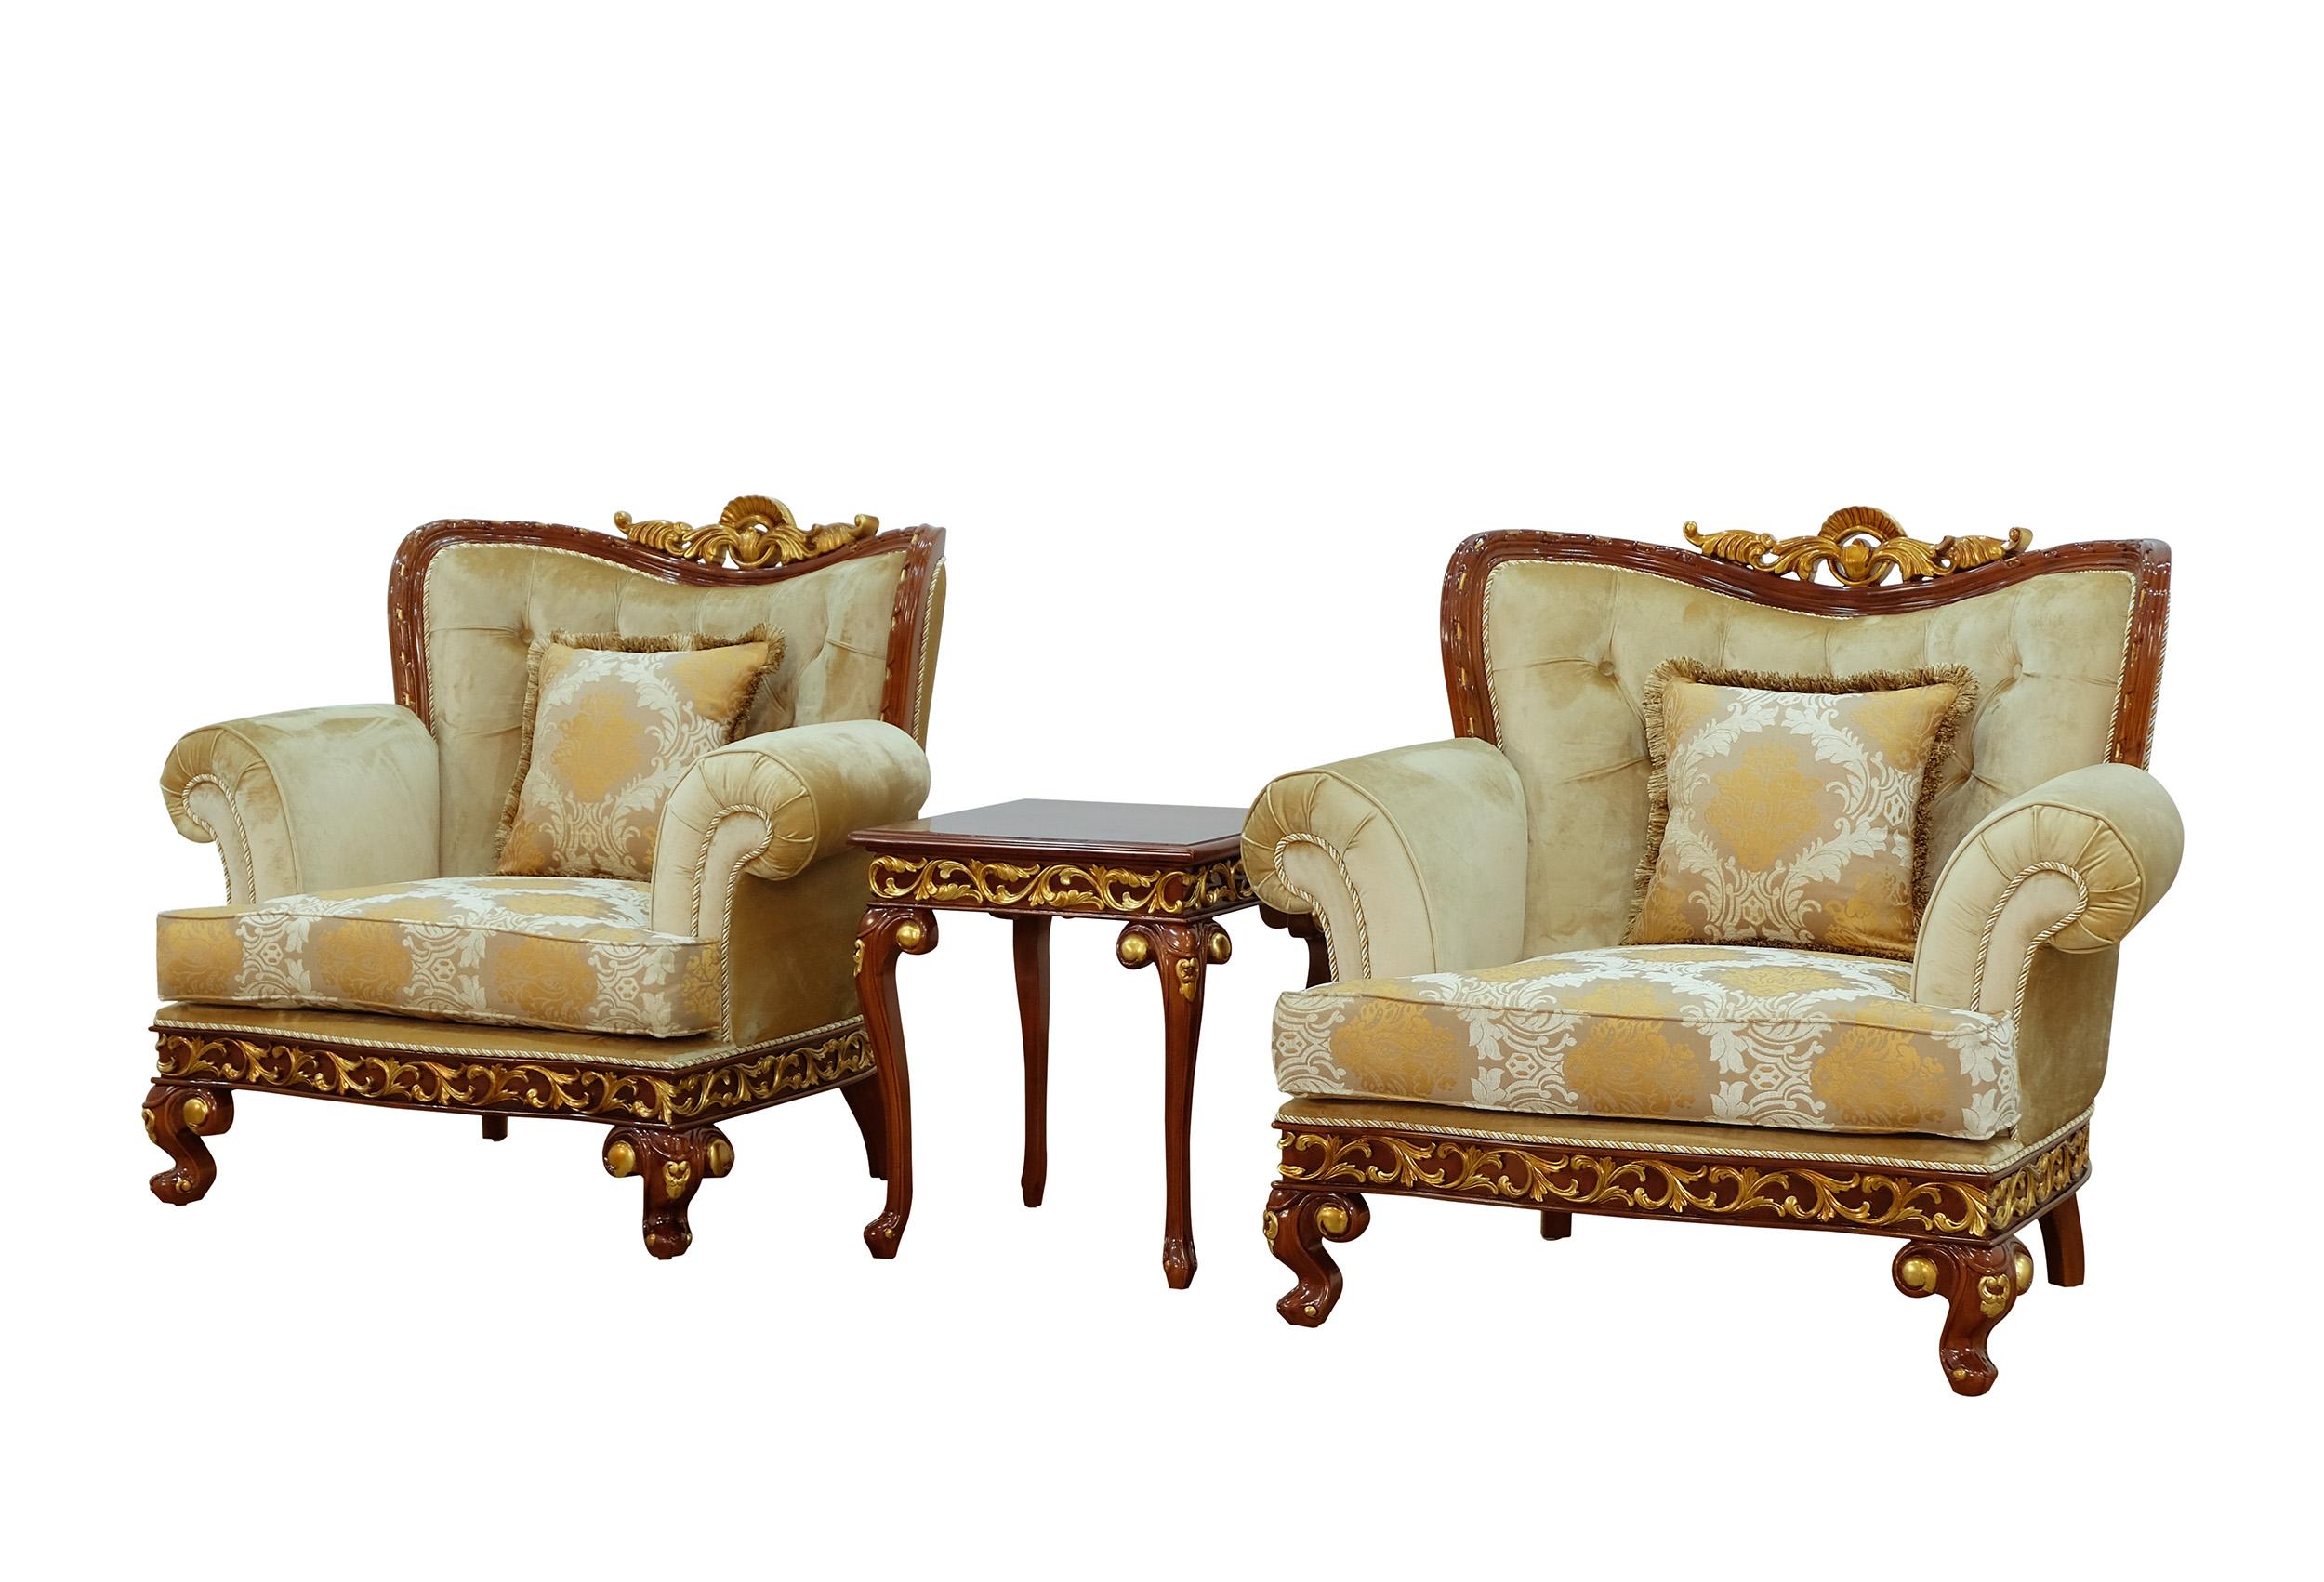 

    
Luxury Walnut & Gold Wood Trim FANTASIA Chair EUROPEAN FURNITURE Traditional
